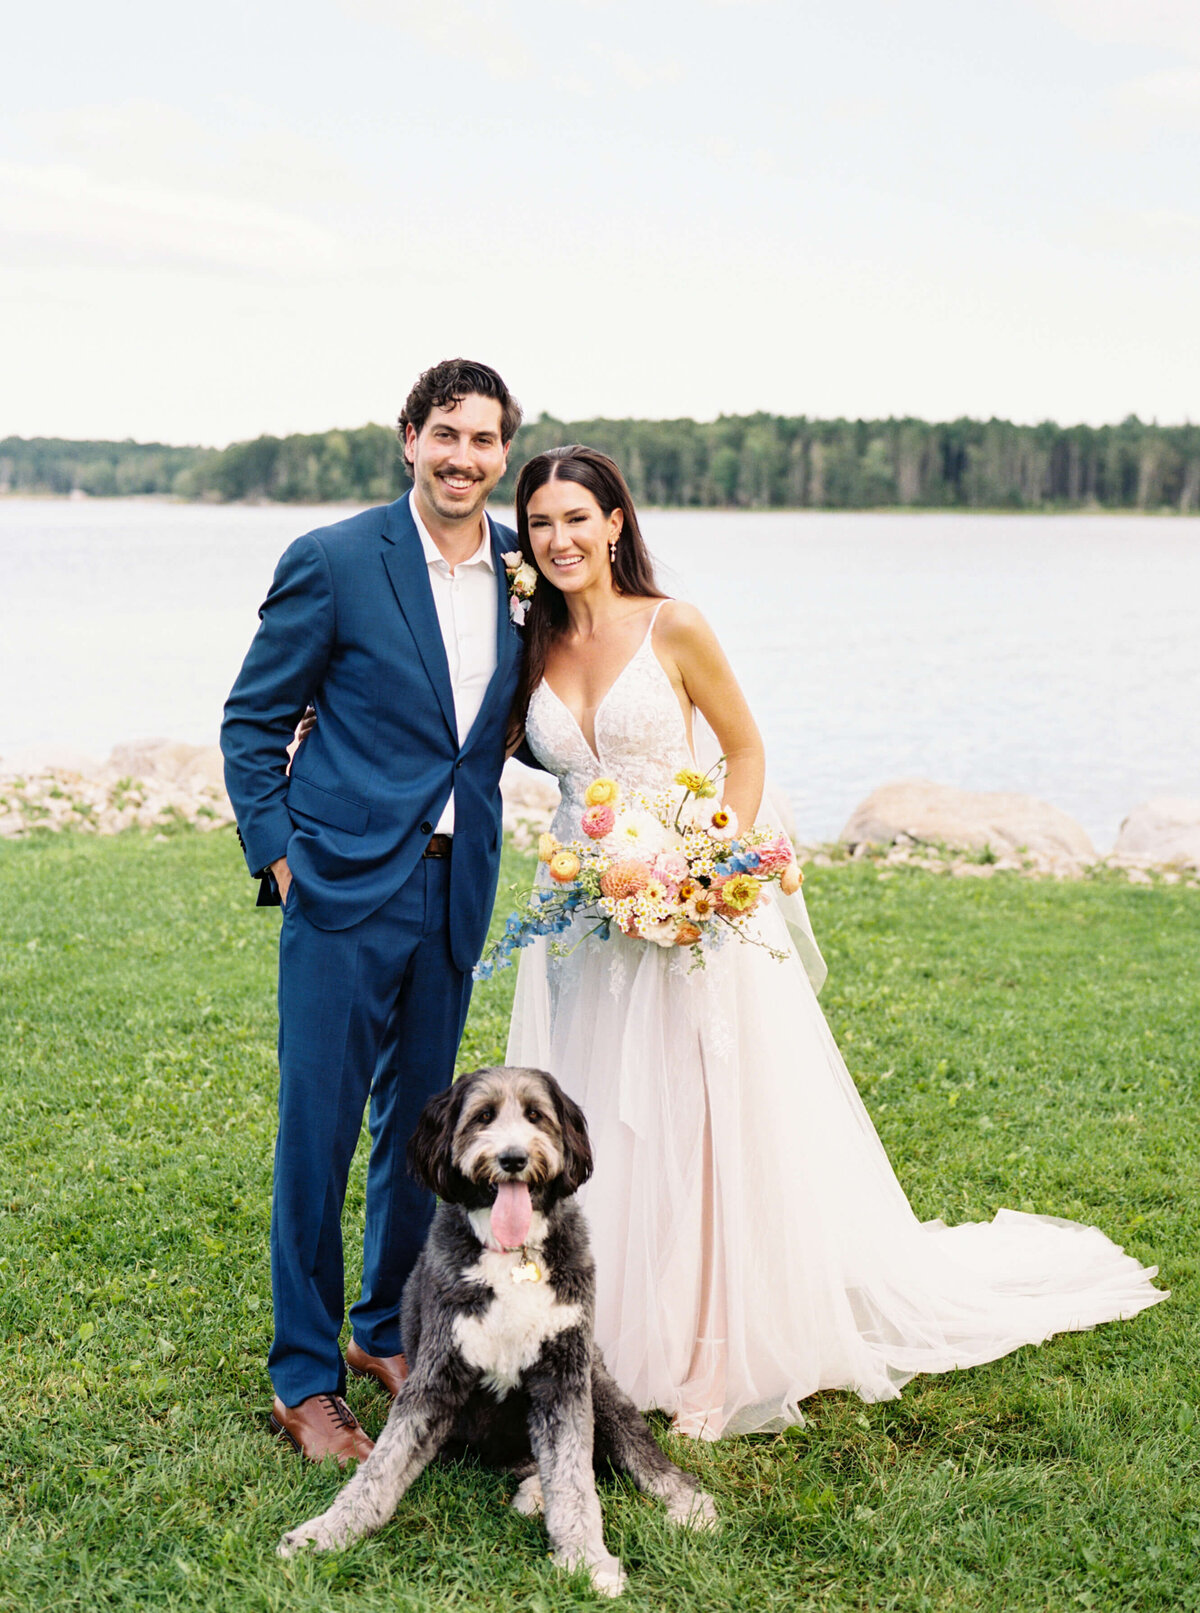 Bride and groom portraits with dog by Halifax wedding photographer,Alyssa Joy Photography